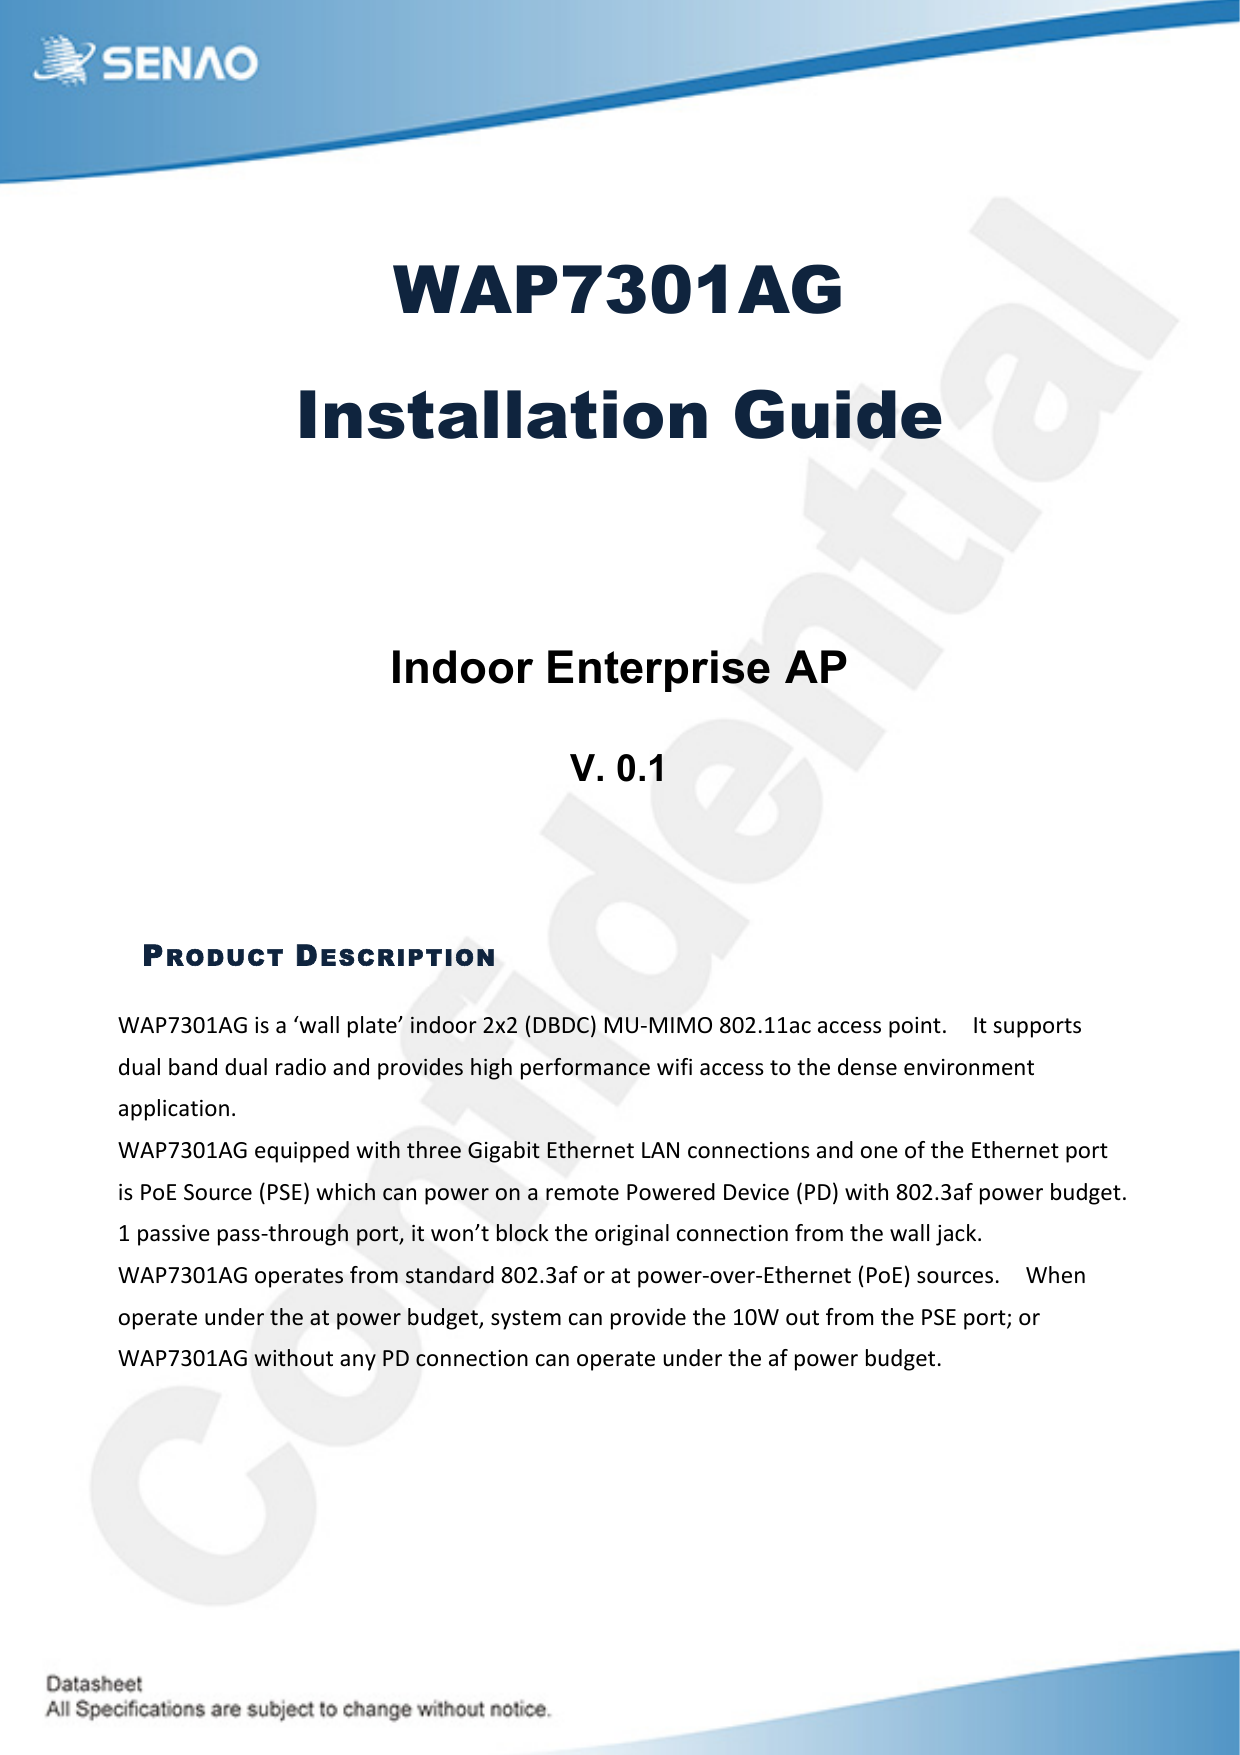  WAP7301AG Installation Guide   Indoor Enterprise AP  V. 0.1   PRODUCT DESCRIPTION !&quot;#$%&amp;&apos;&quot;()*+),)-.,//)0/,123)*45667)898):;&lt;;=&gt;)?@A?B?C)D&amp;8E&apos;&apos;,F),FF2++)06*41E))B1)+G00671+)5G,/)H,45)5G,/)7,5*6),45)076I*52+)J*KJ)027L67M,4F2).*L*),FF2++)16)1J2)524+2)24I*764M241),00/*F,1*64E)!&quot;#$%&amp;&apos;&quot;()2NG*0025).*1J)1J722)(*K,H*1)O1J27421)P&quot;Q)F6442F1*64+),45)642)6L)1J2)O1J27421)0671)*+)#6O)R6G7F2):#RO&gt;).J*FJ)F,4)06.27)64),)72M612)#6.2725);2I*F2):#;&gt;).*1J)D&amp;8E%,L)06.27)HG5K21E)&apos;)0,++*I2)0,++A1J76GKJ)0671S)*1).6431)H/6FT)1J2)67*K*4,/)F6442F1*64)L76M)1J2).,//)U,FTE) ) )!&quot;#$%&amp;&apos;&quot;()6027,12+)L76M)+1,45,75)D&amp;8E%,L)67),1)06.27A6I27AO1J27421):#6O&gt;)+6G7F2+E) ) !J24)6027,12)G4527)1J2),1)06.27)HG5K21S)+V+12M)F,4)076I*52)1J2)&apos;&amp;!)6G1)L76M)1J2)#RO)0671W)67)!&quot;#$%&amp;&apos;&quot;().*1J6G1),4V)#;)F6442F1*64)F,4)6027,12)G4527)1J2),L)06.27)HG5K21E)   